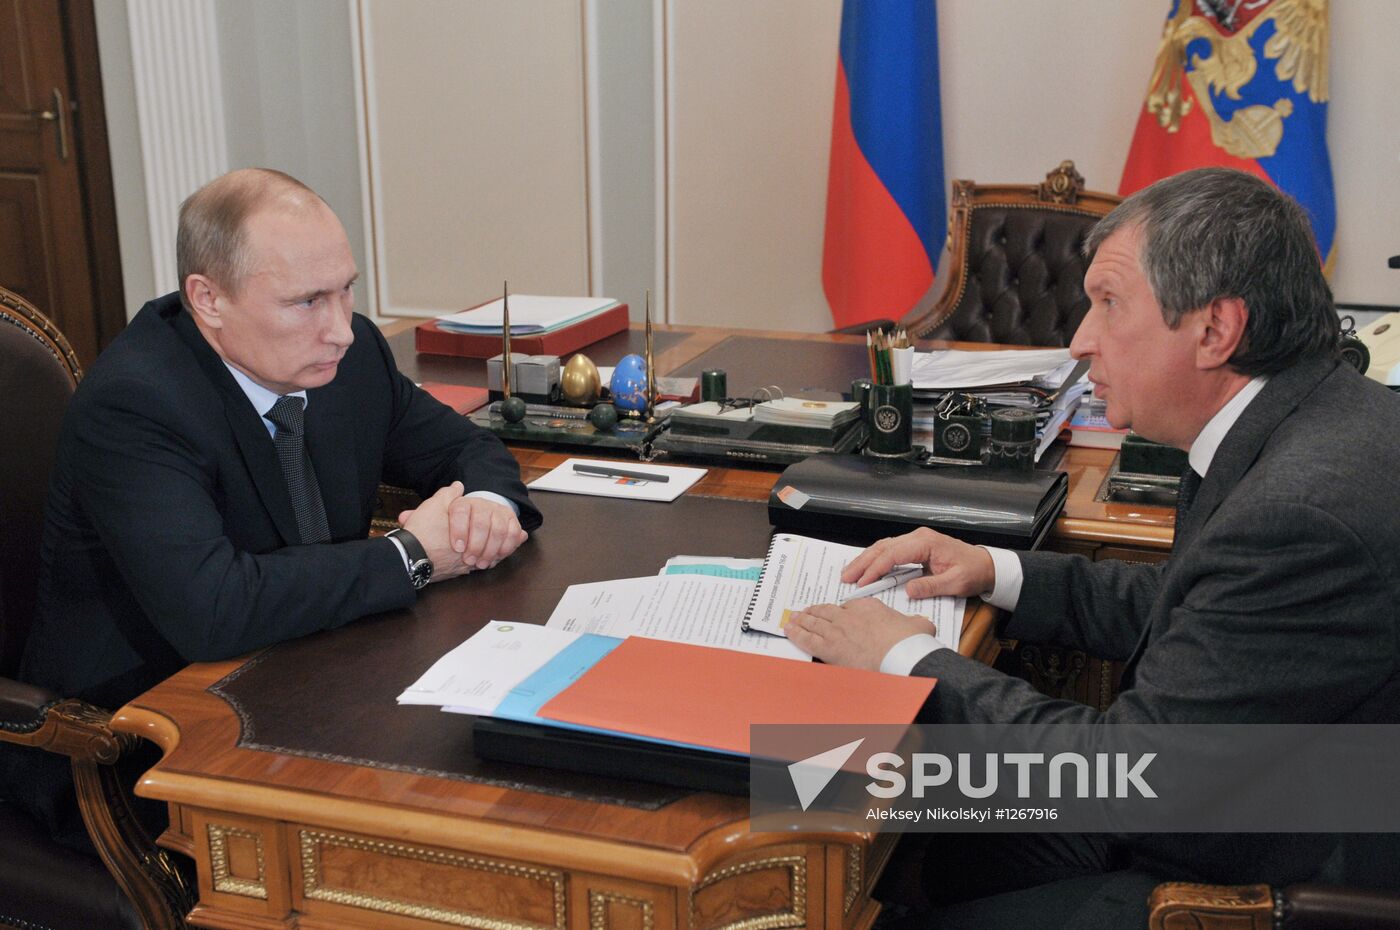 Vladimir Putin meets with Igor Sechin in Novo-Ogaryovo